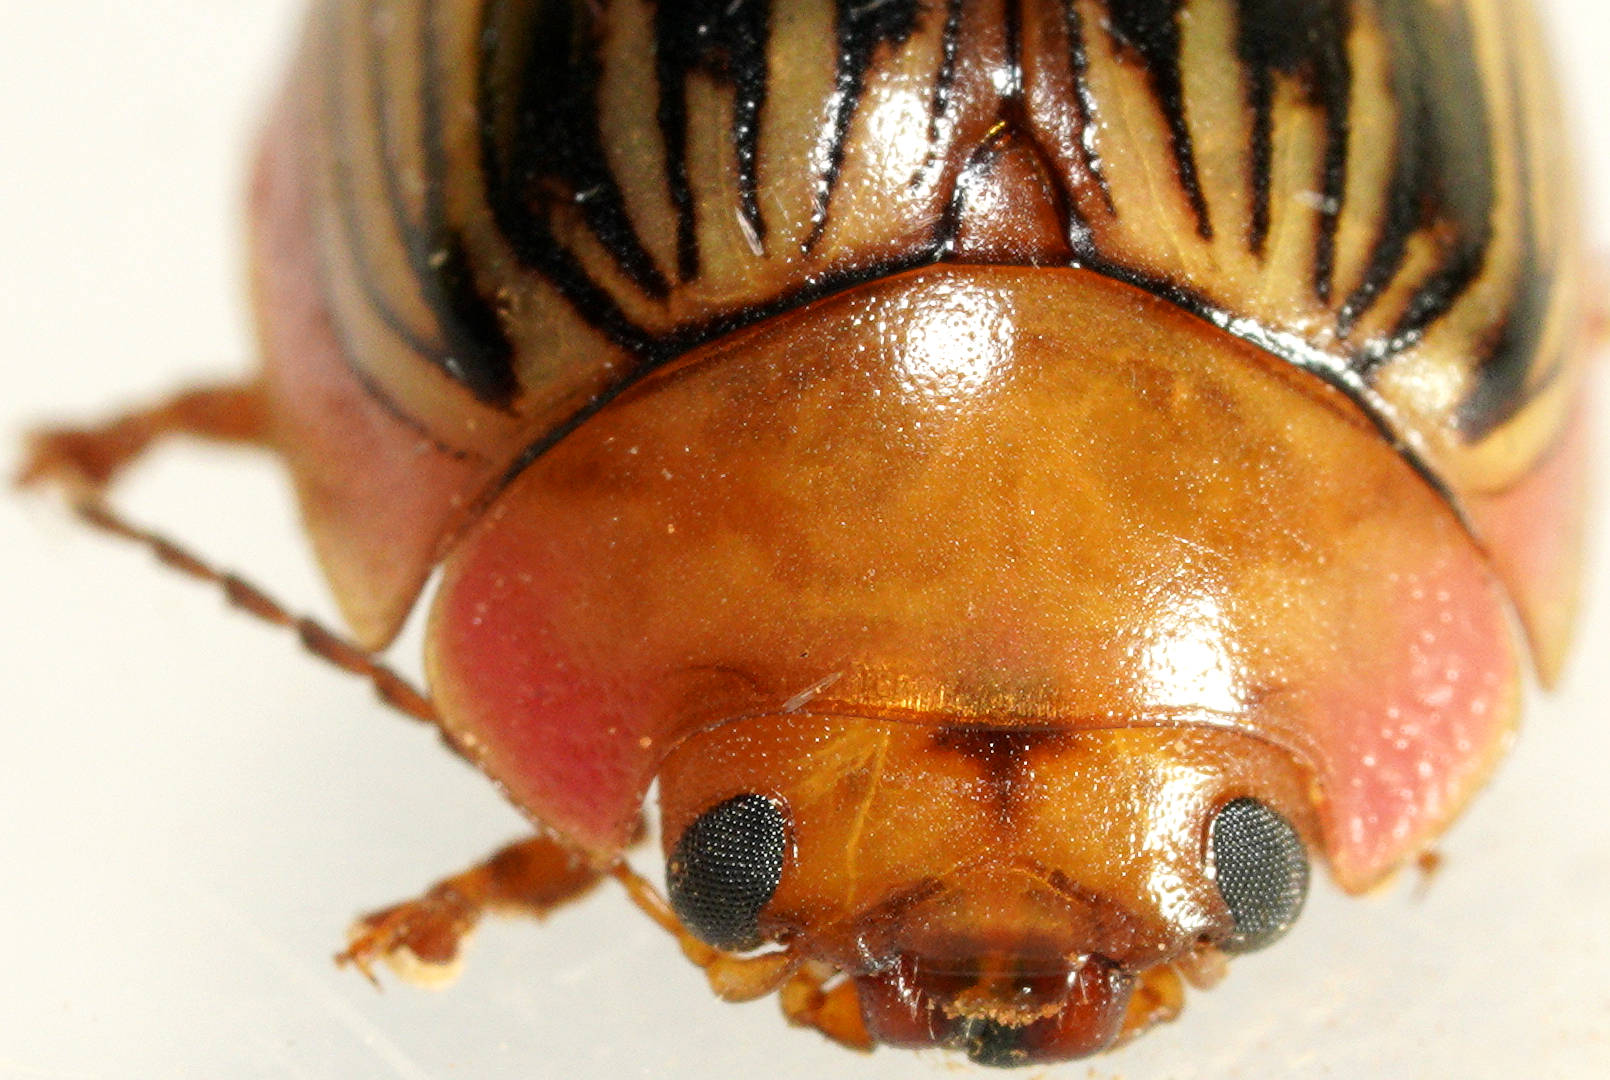 Variable Leaf Beetle (Paropsisterna variabilis)